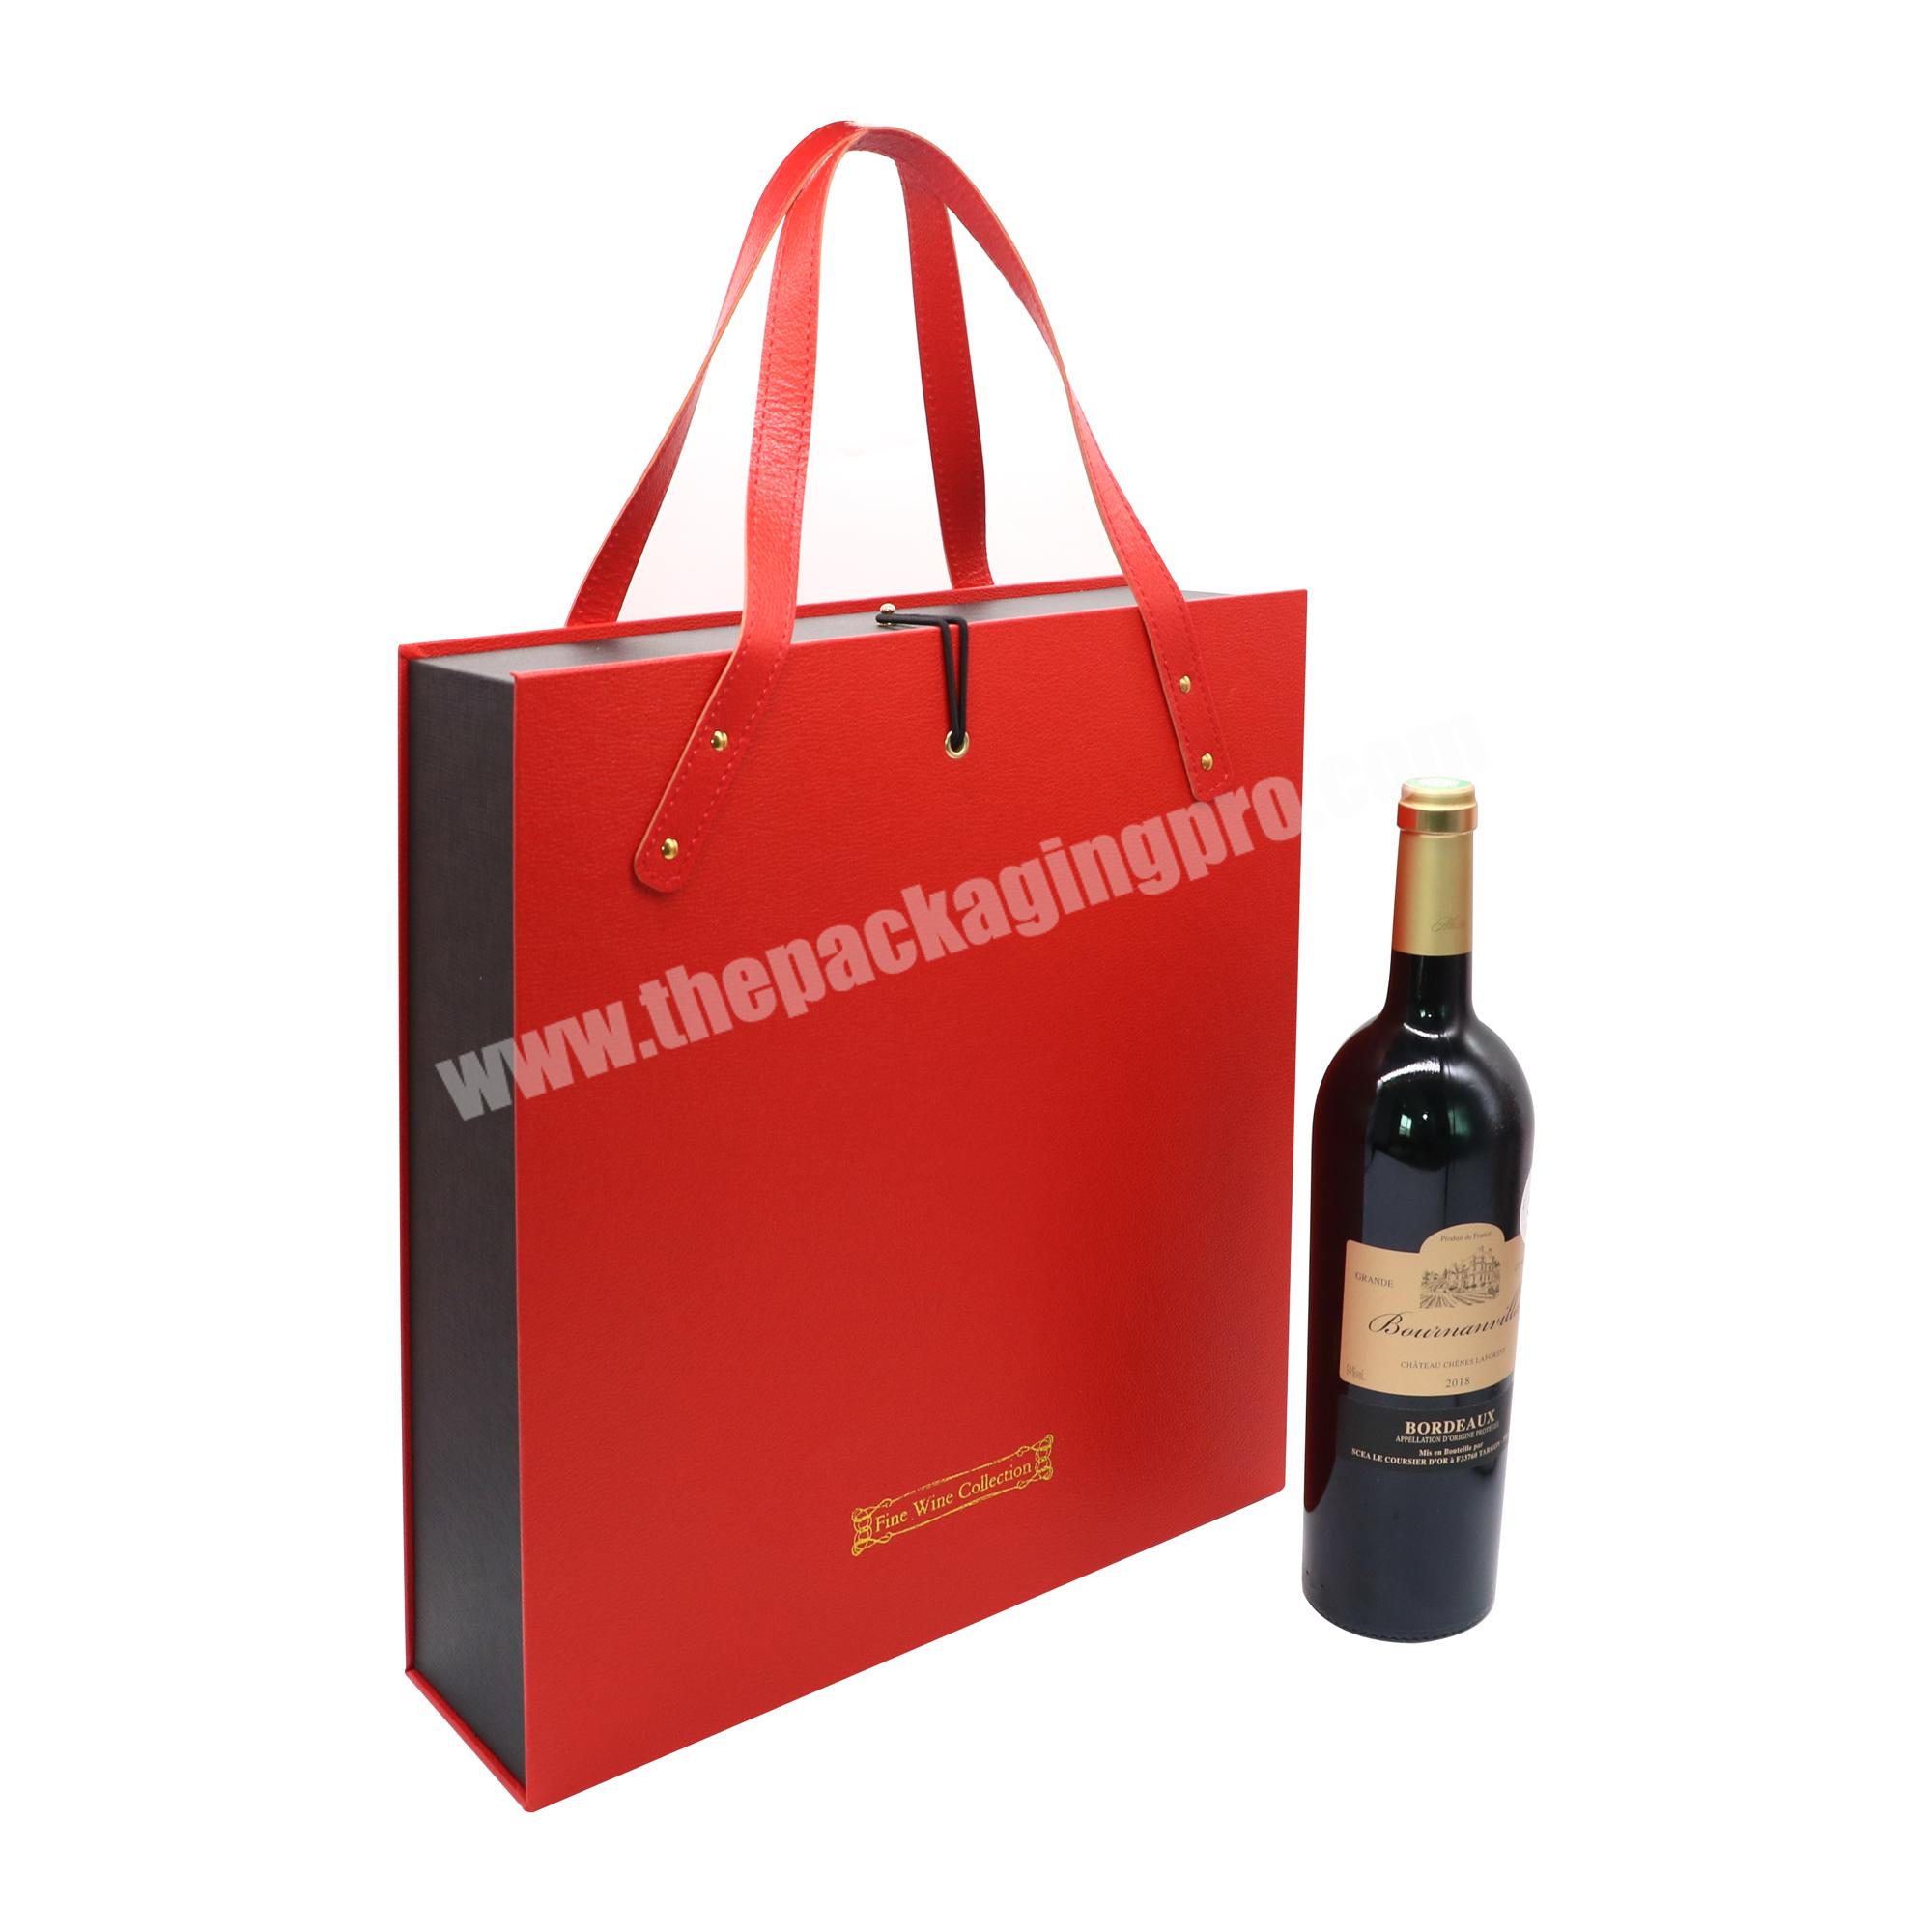 Low moq wine tumbler gift set box luxury custom wine boxes wine glass box set